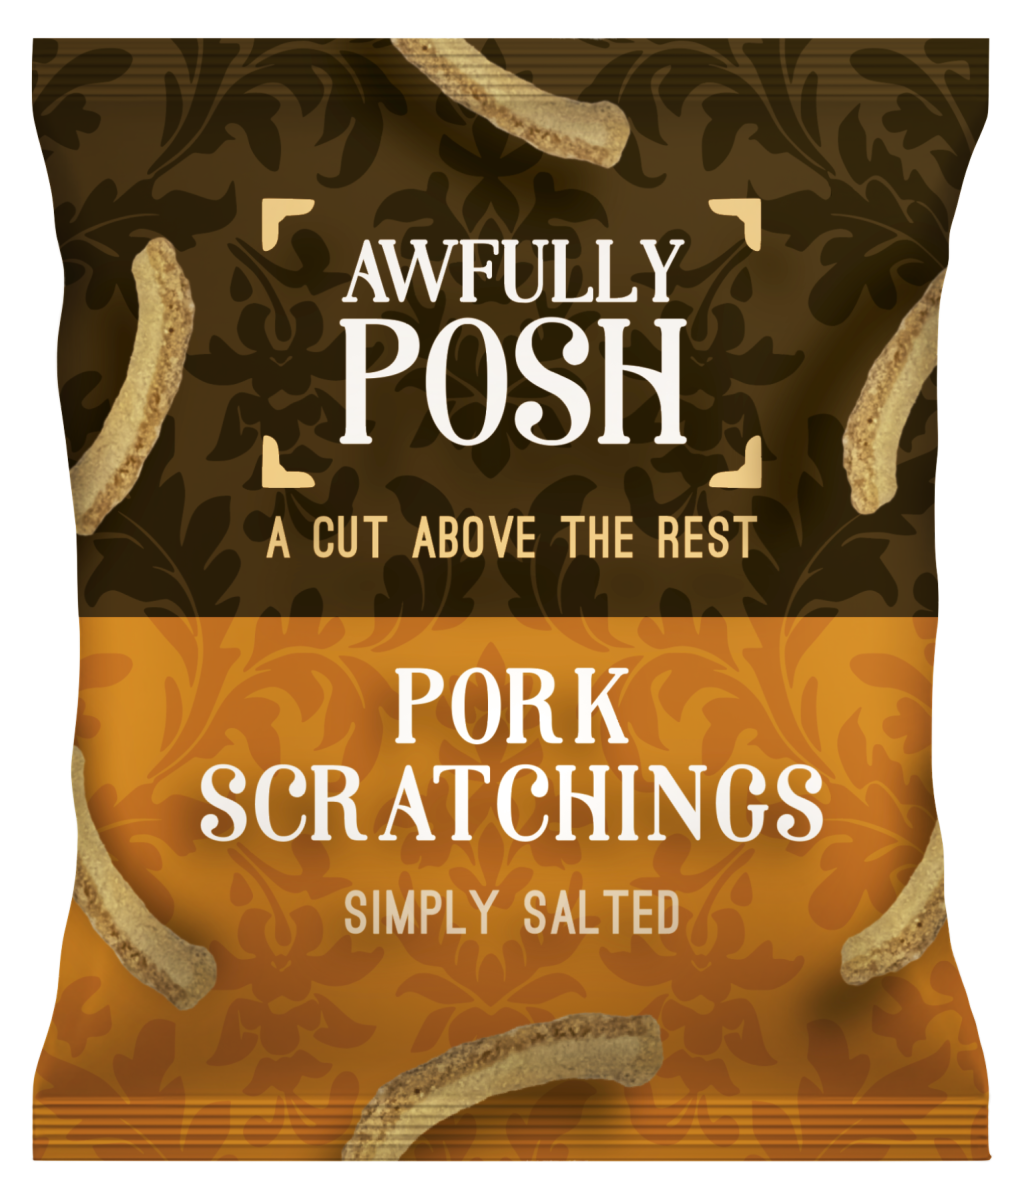 AWFULLY POSH Pork Scratching Simply Salt